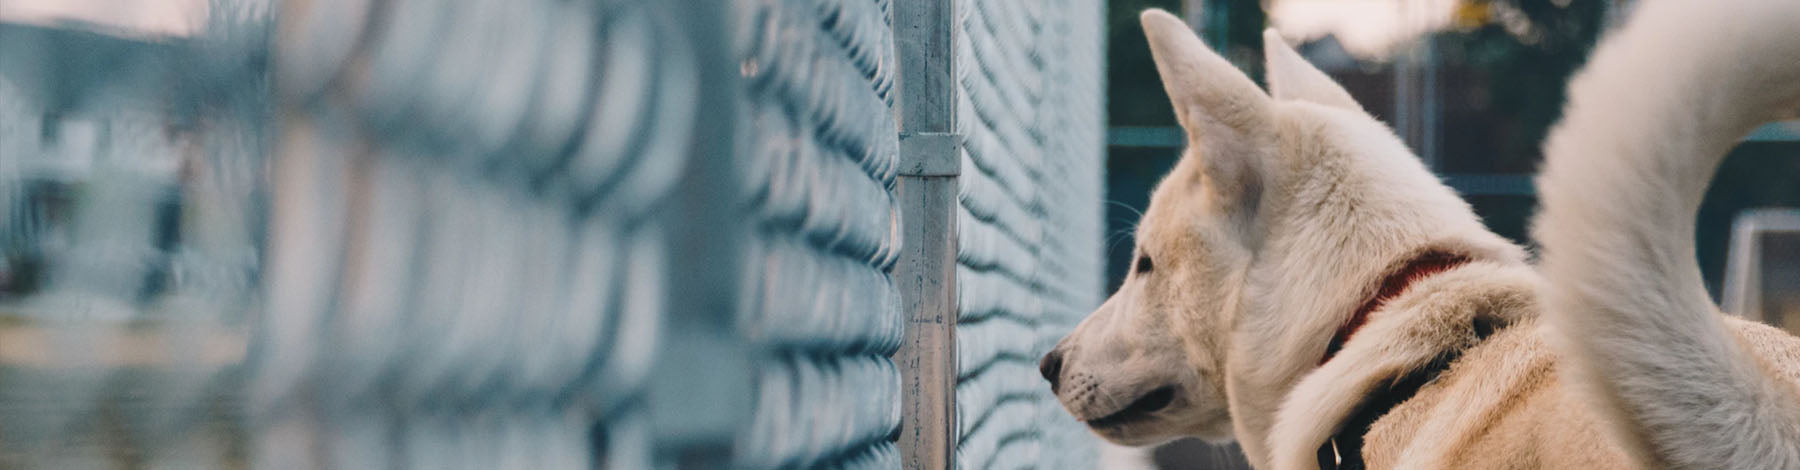 Are Electric Dog Fences Cruel?